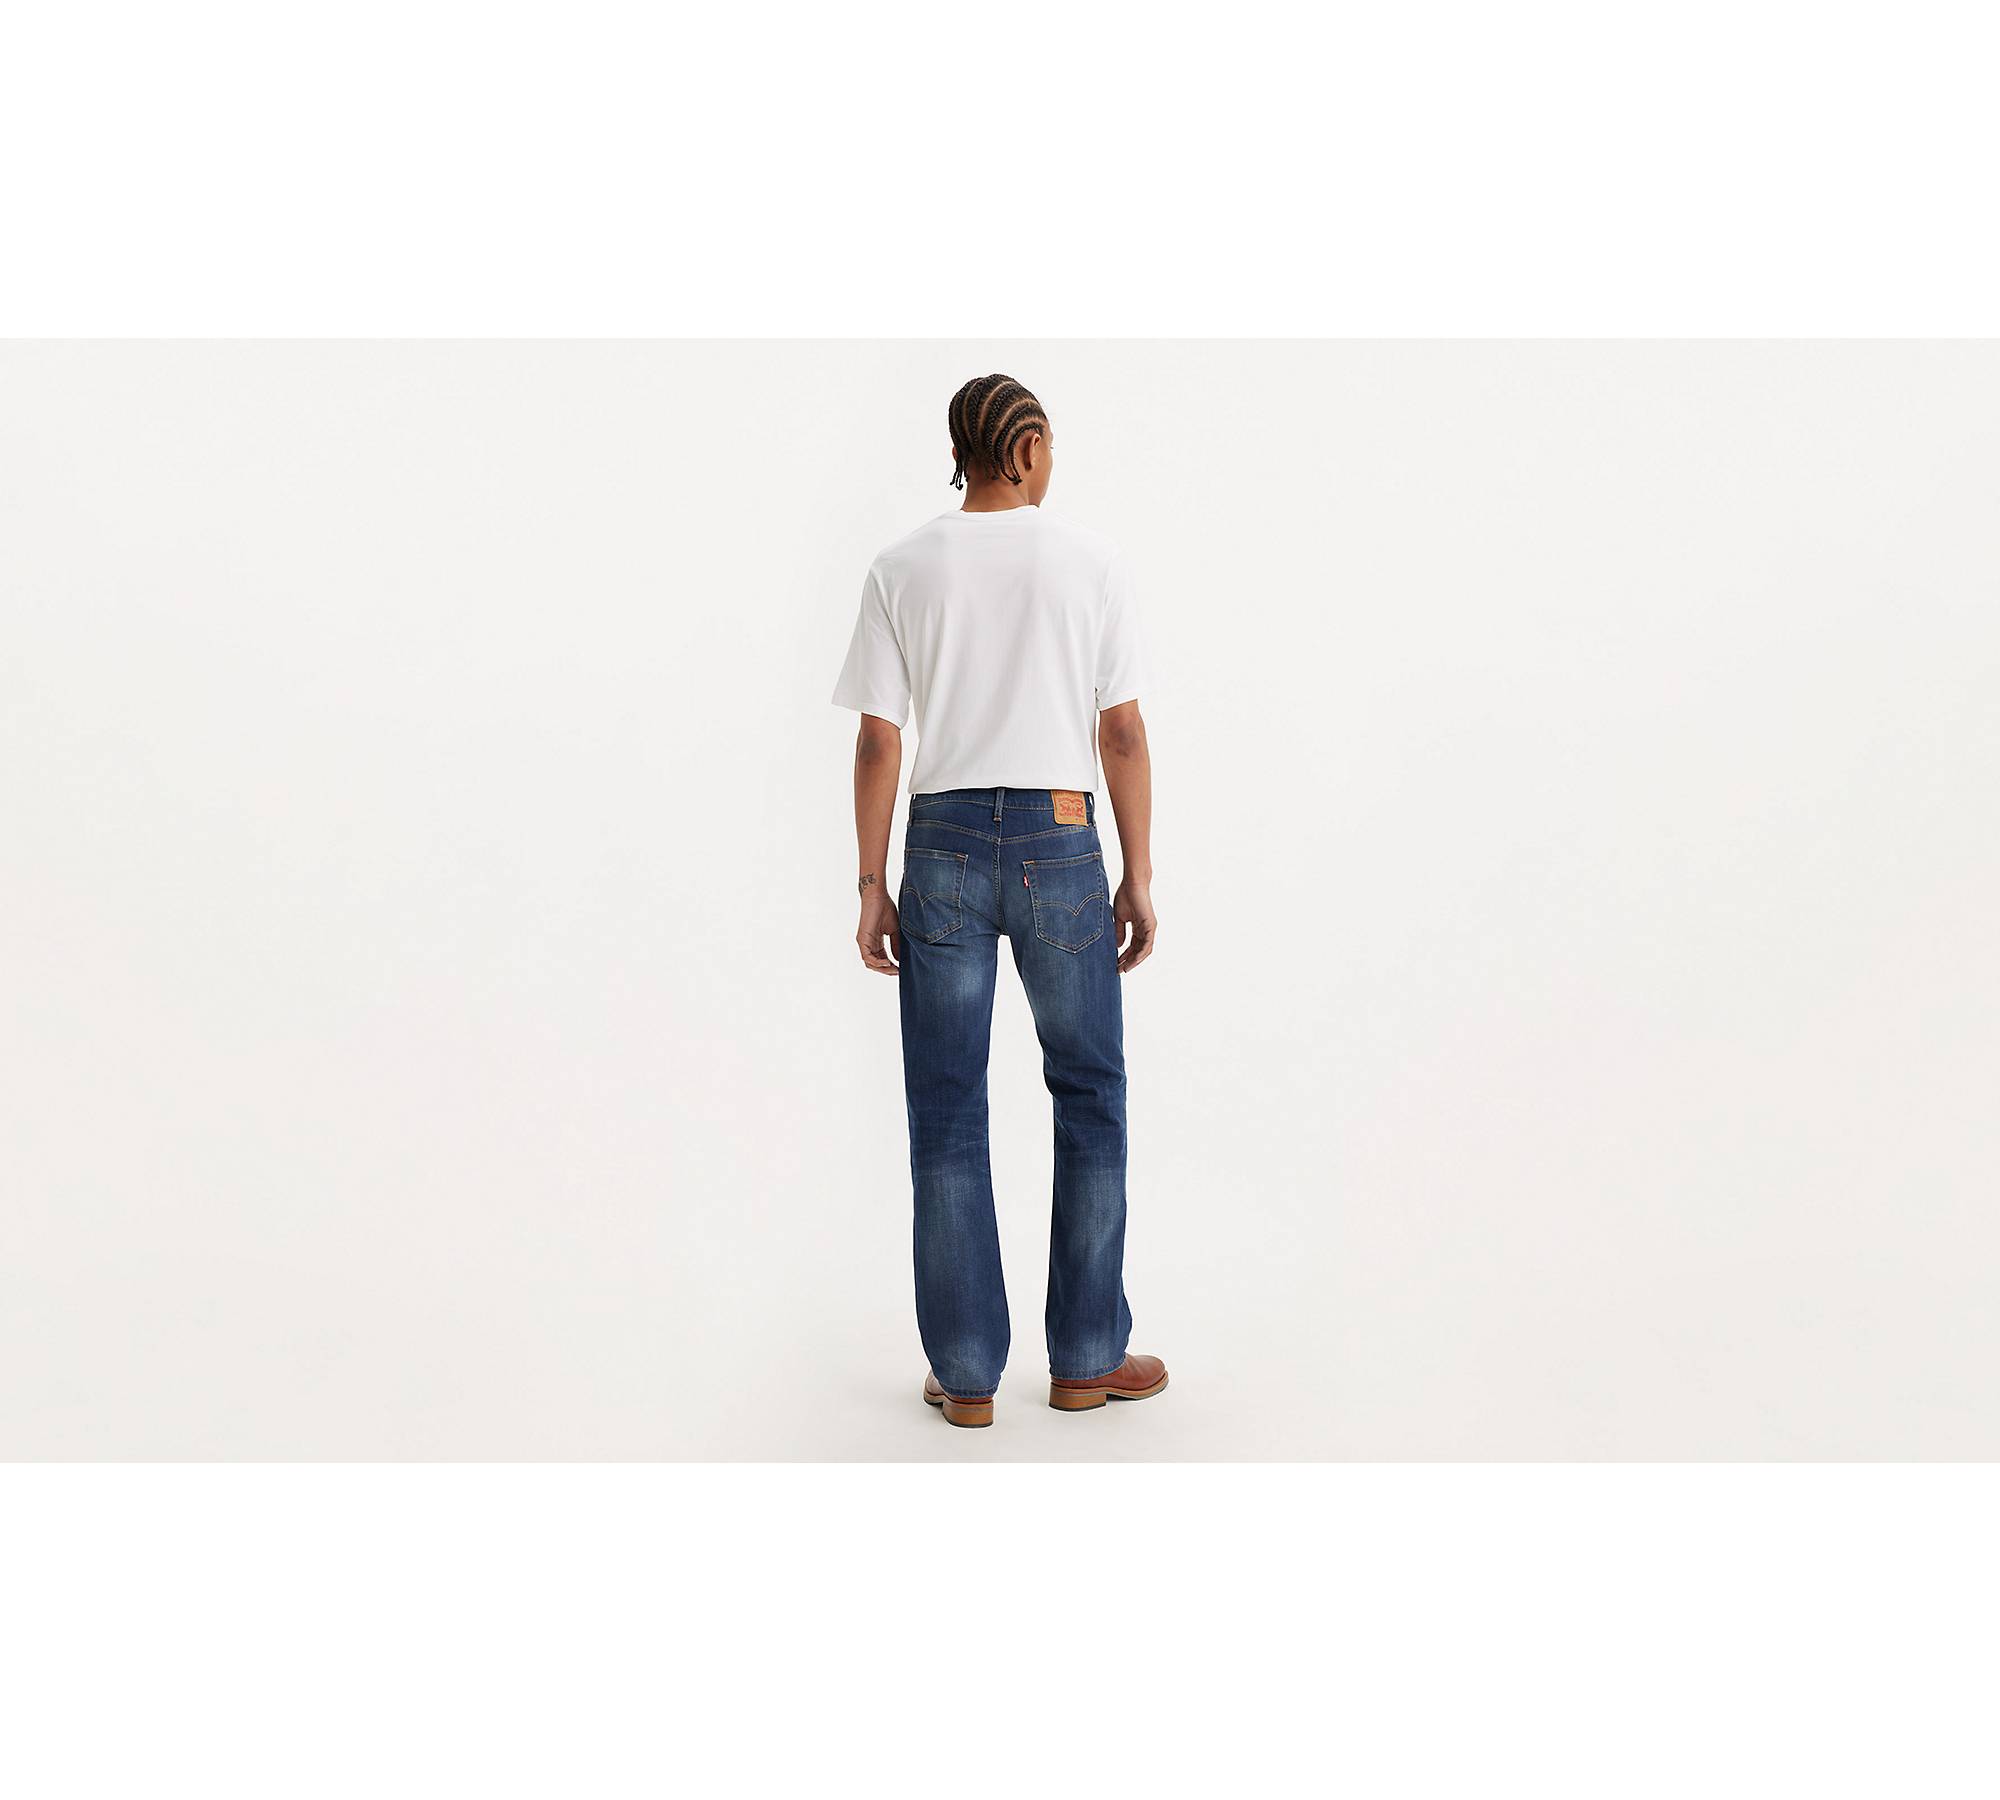 Levi's Men's 527 Slim Bootcut Stretch Low Rise Slim Fit Boot Cut Jeans -  Wave